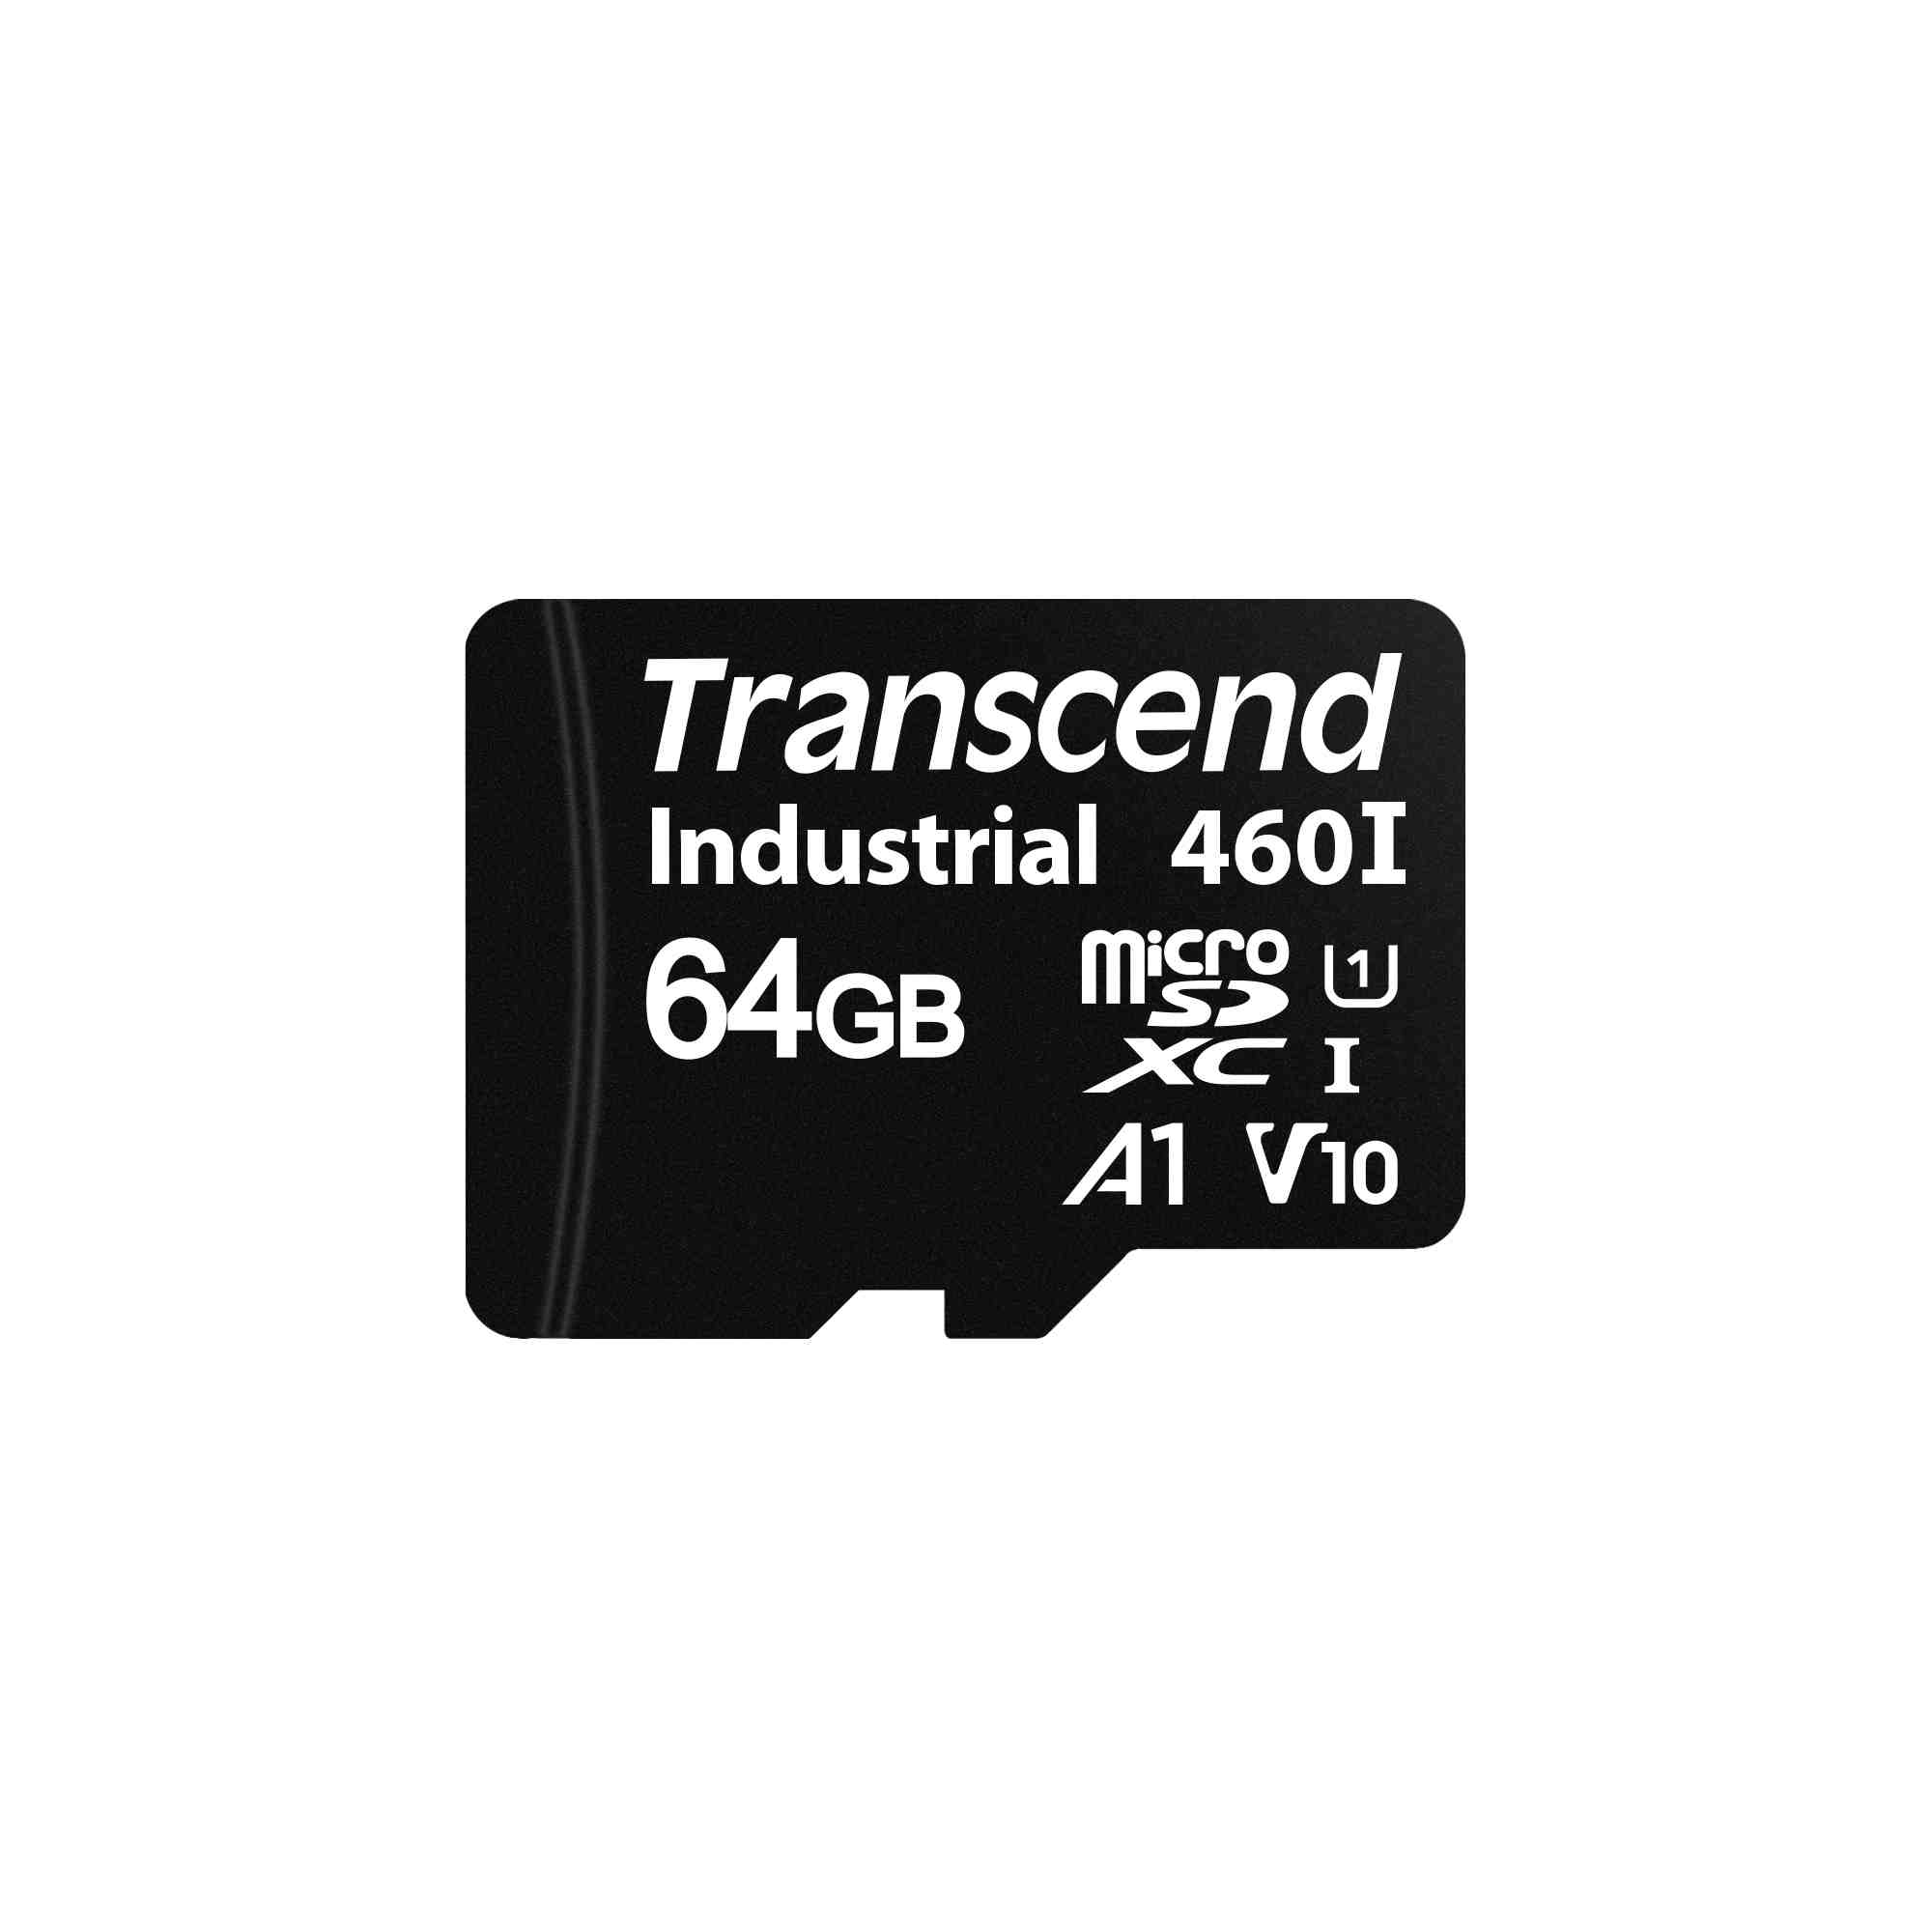 TRANSCEND MicroSDXC karta 64GB 460I,  UHS-I U1 A1 100/ 80 MB/ s0 